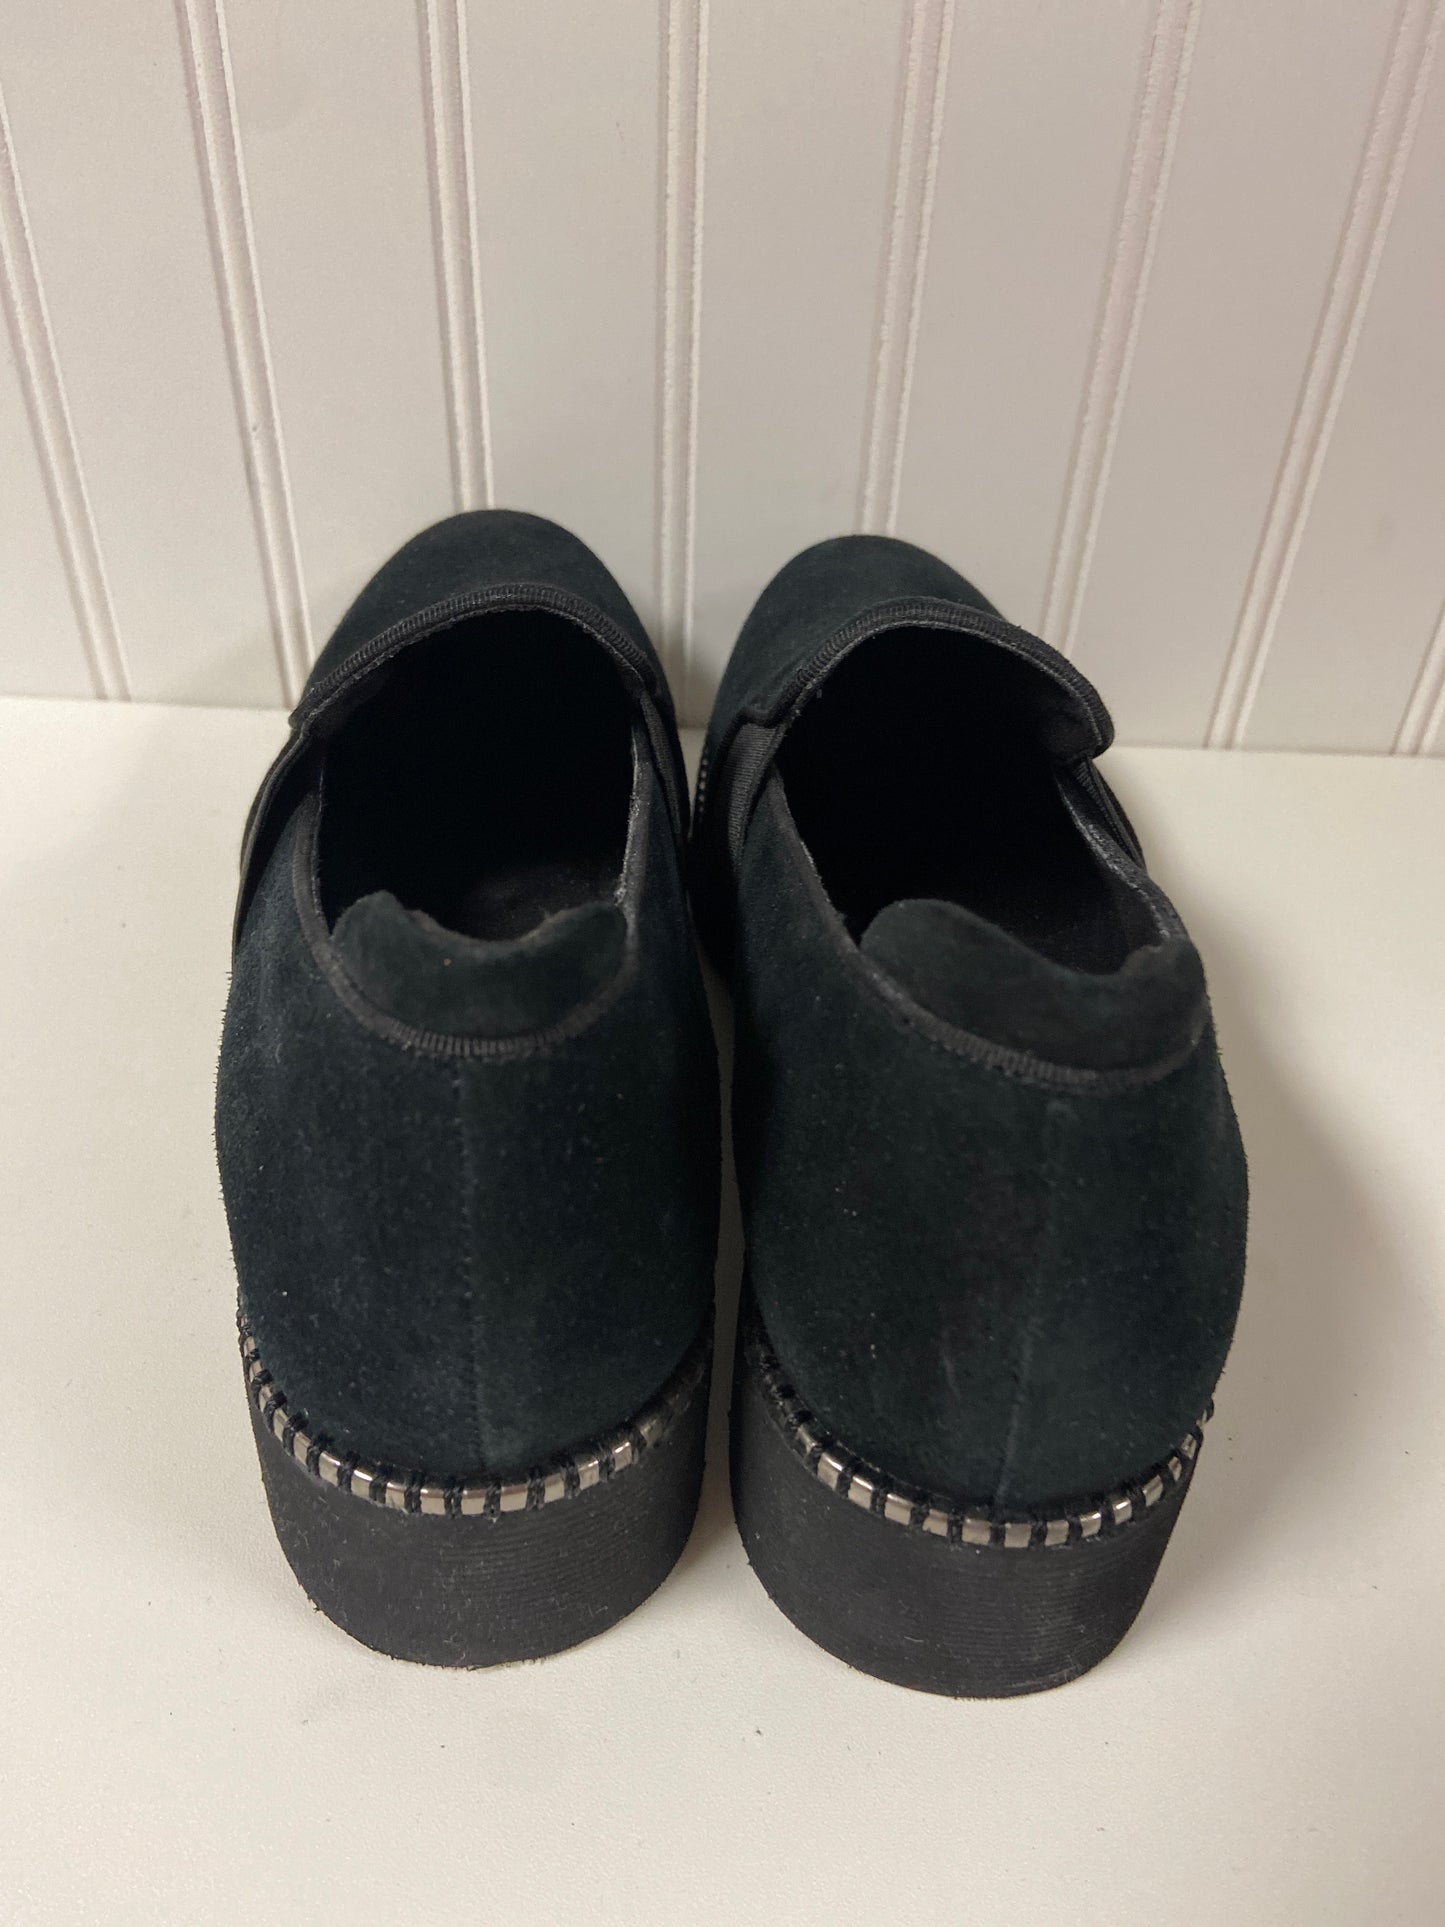 Black Shoes Flats Vaneli, Size 8